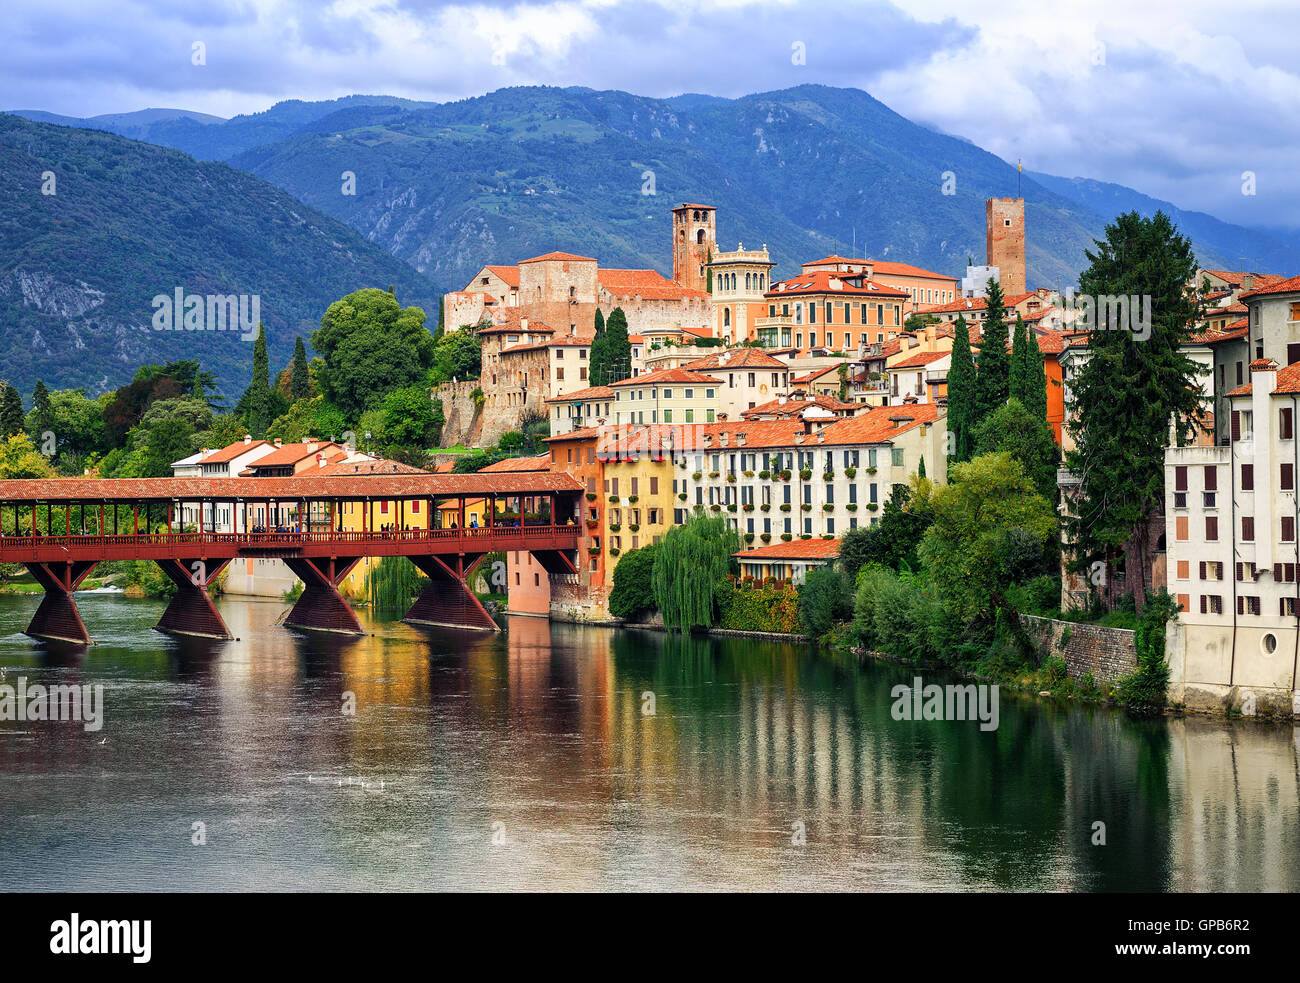 Bassano del Grappa, small medieval town in the Alps mountains, Veneto region, Italy Stock Photo